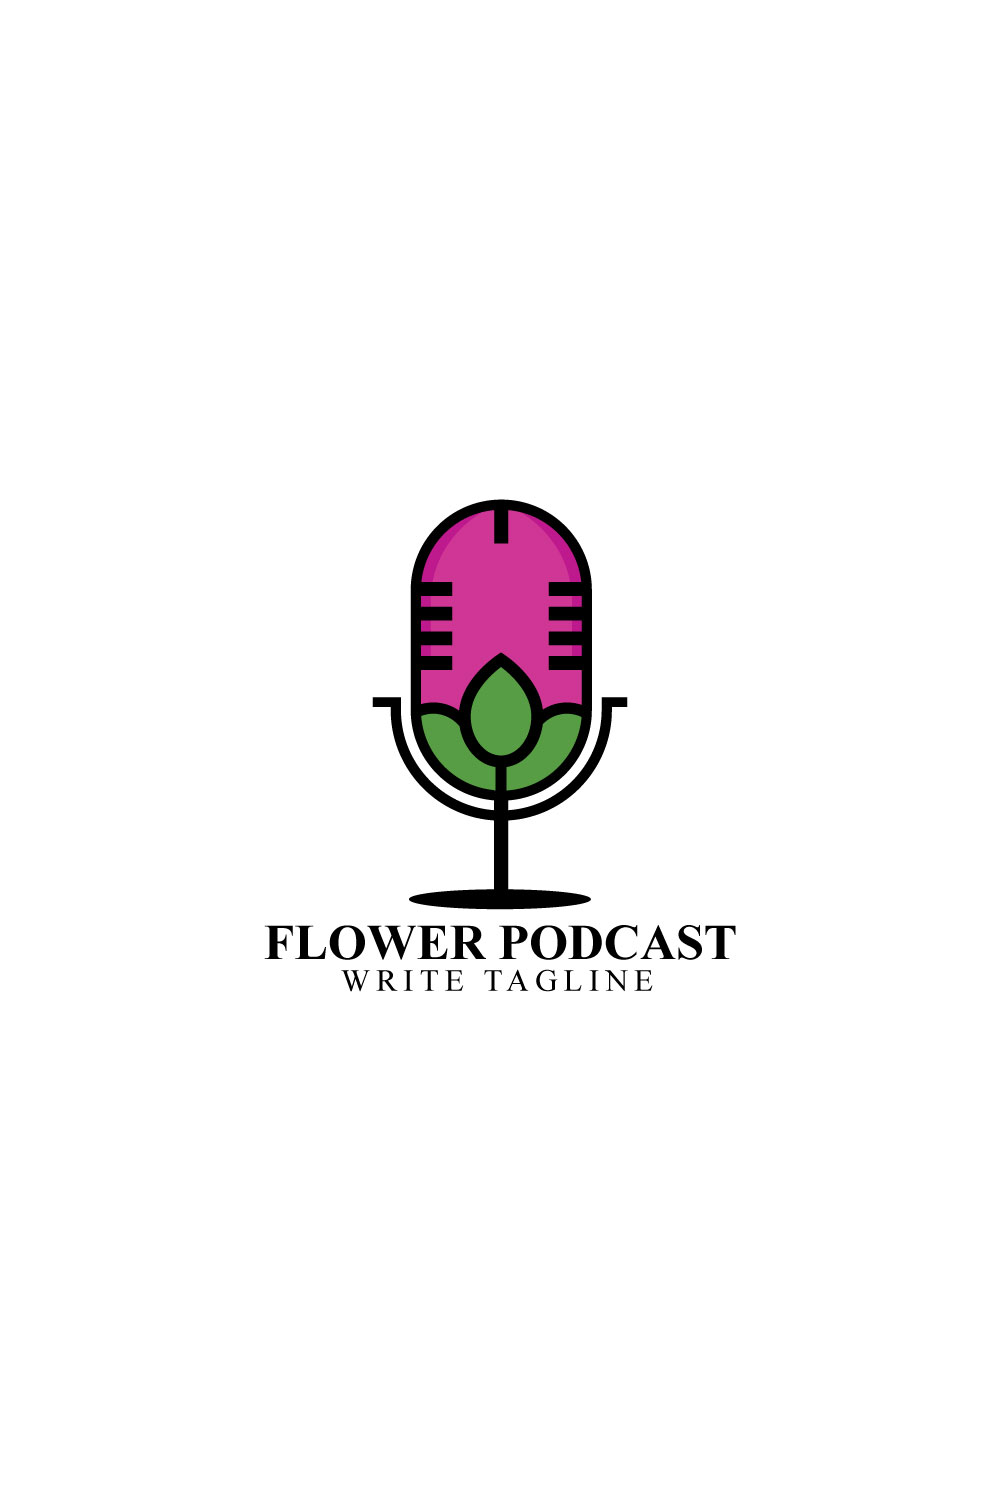 Flower podcast logo design vector template pinterest preview image.